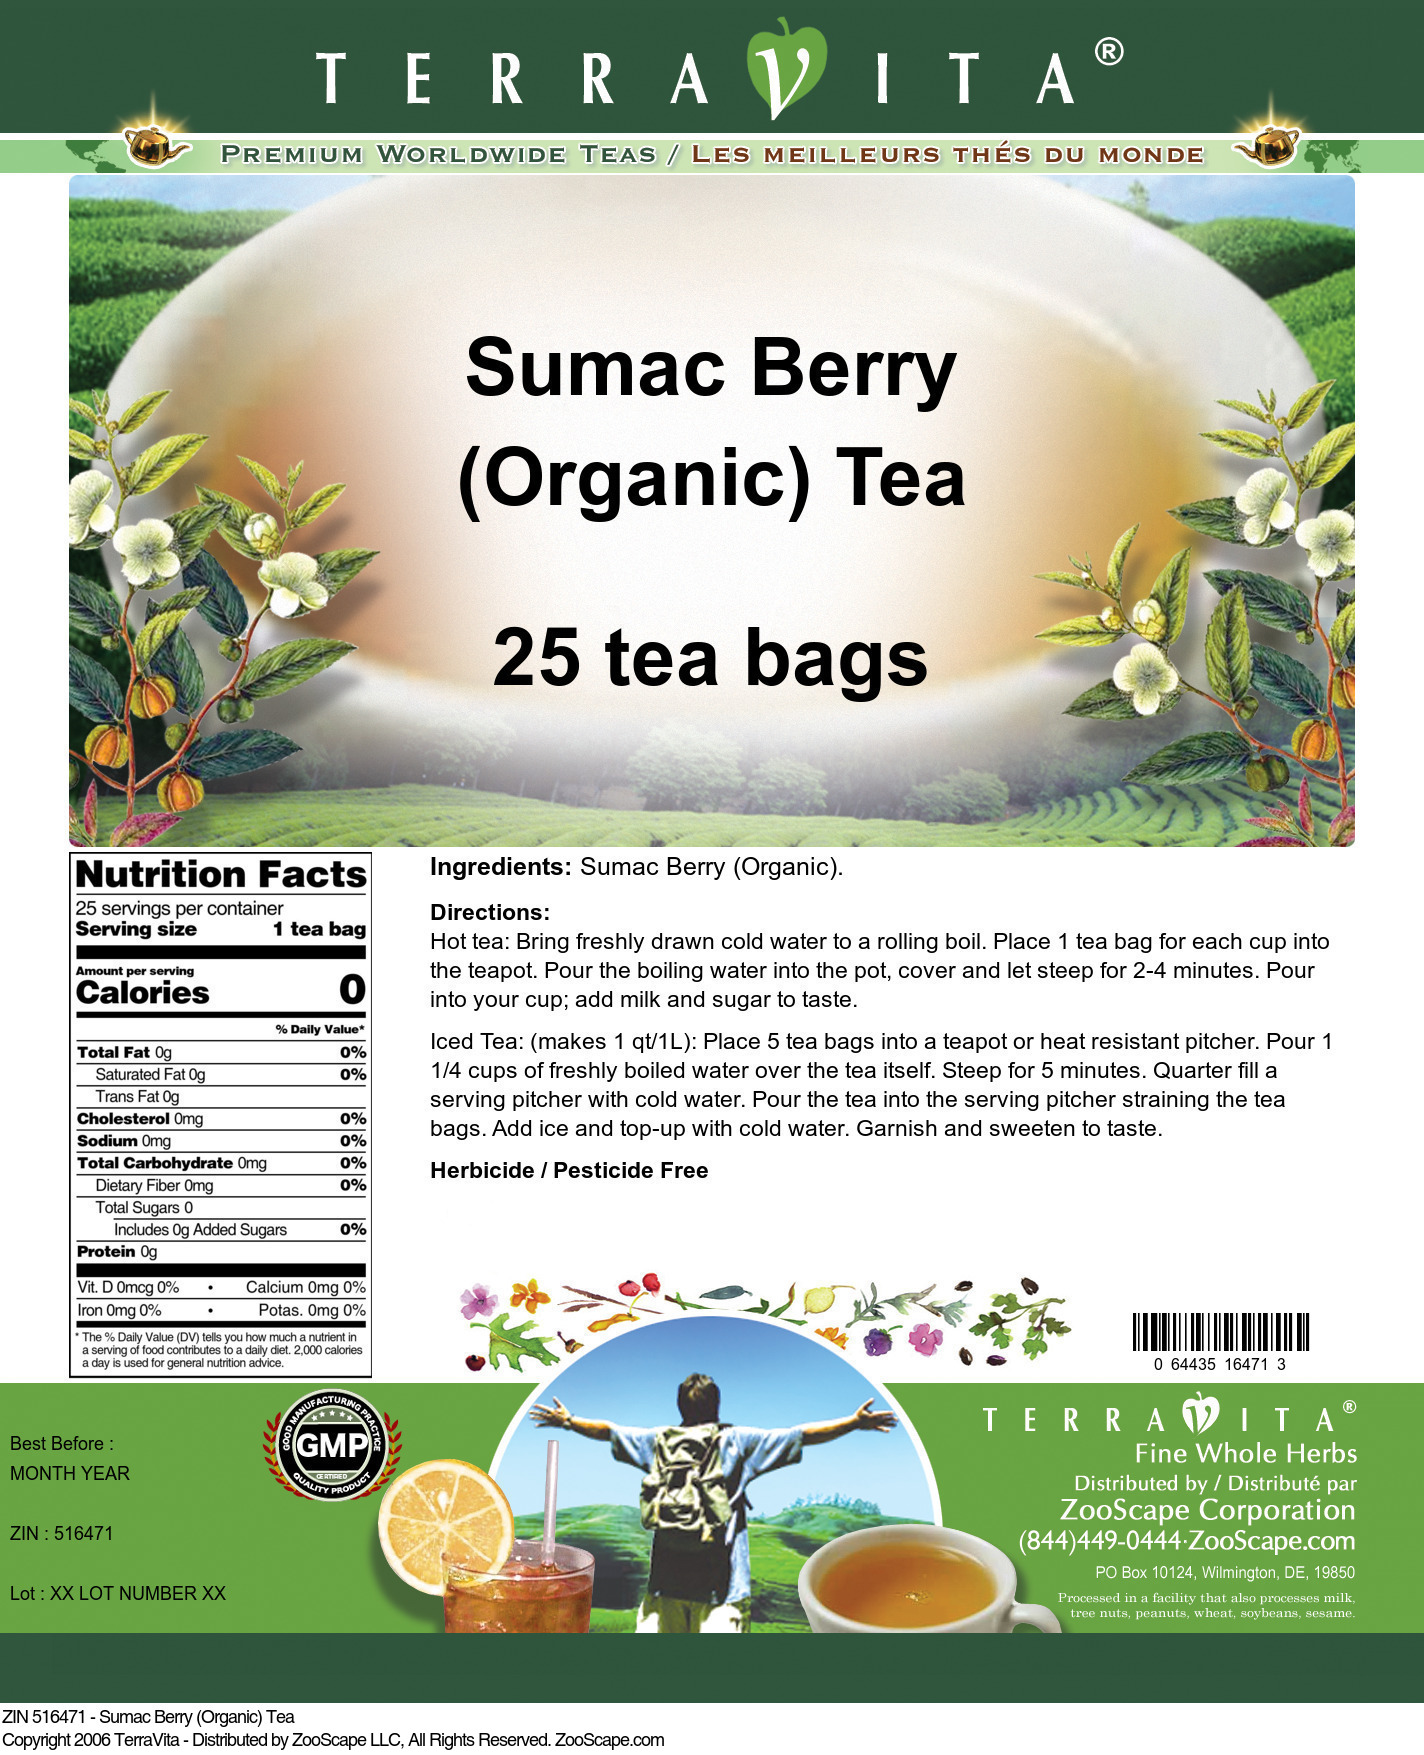 Sumac Berry (Organic) Tea - Label